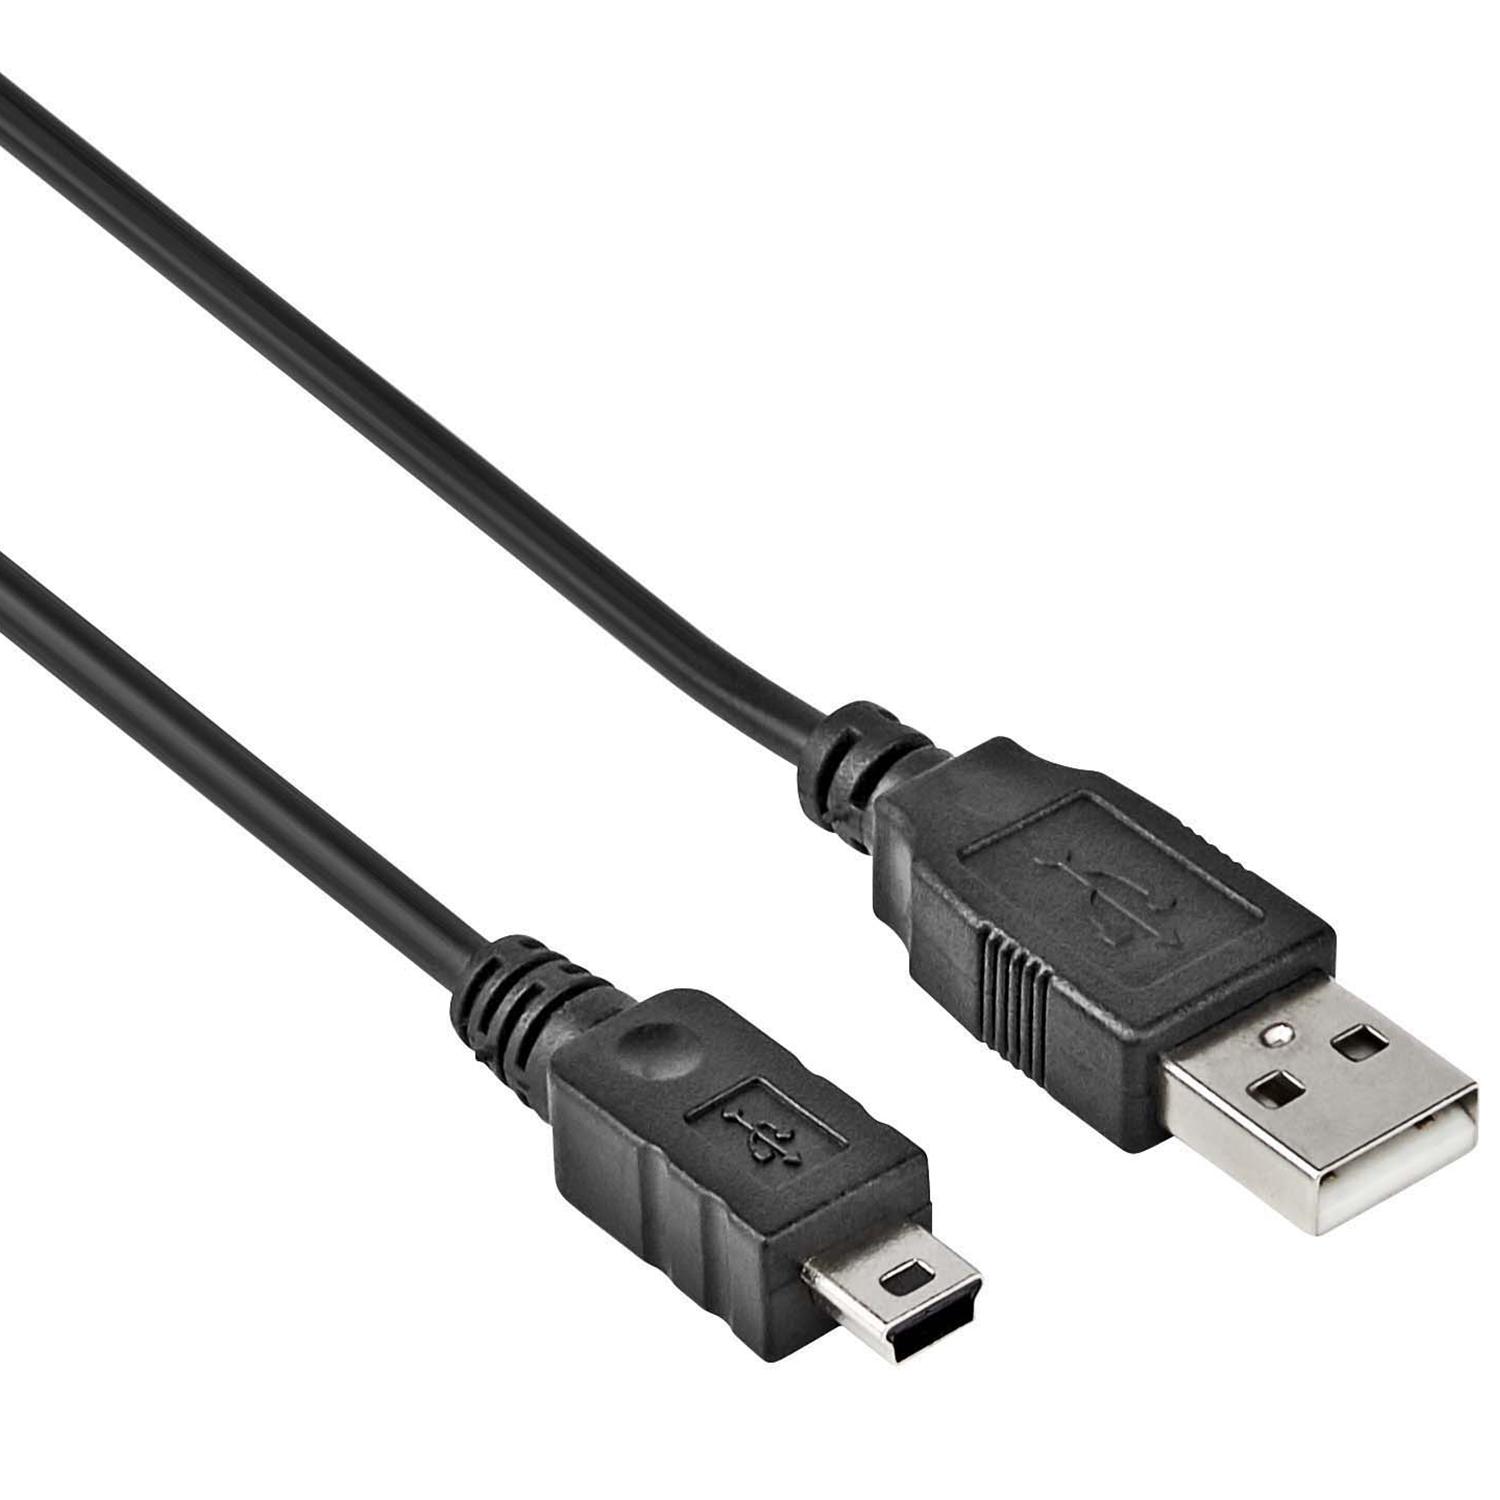 Beroep Pence Hol Mini USB Kabel - Versie: 2.0 - HighSpeed, Aansluiting 1: USB A male,  Aansluiting 2: Mini USB male, Lengte: 1 meter.